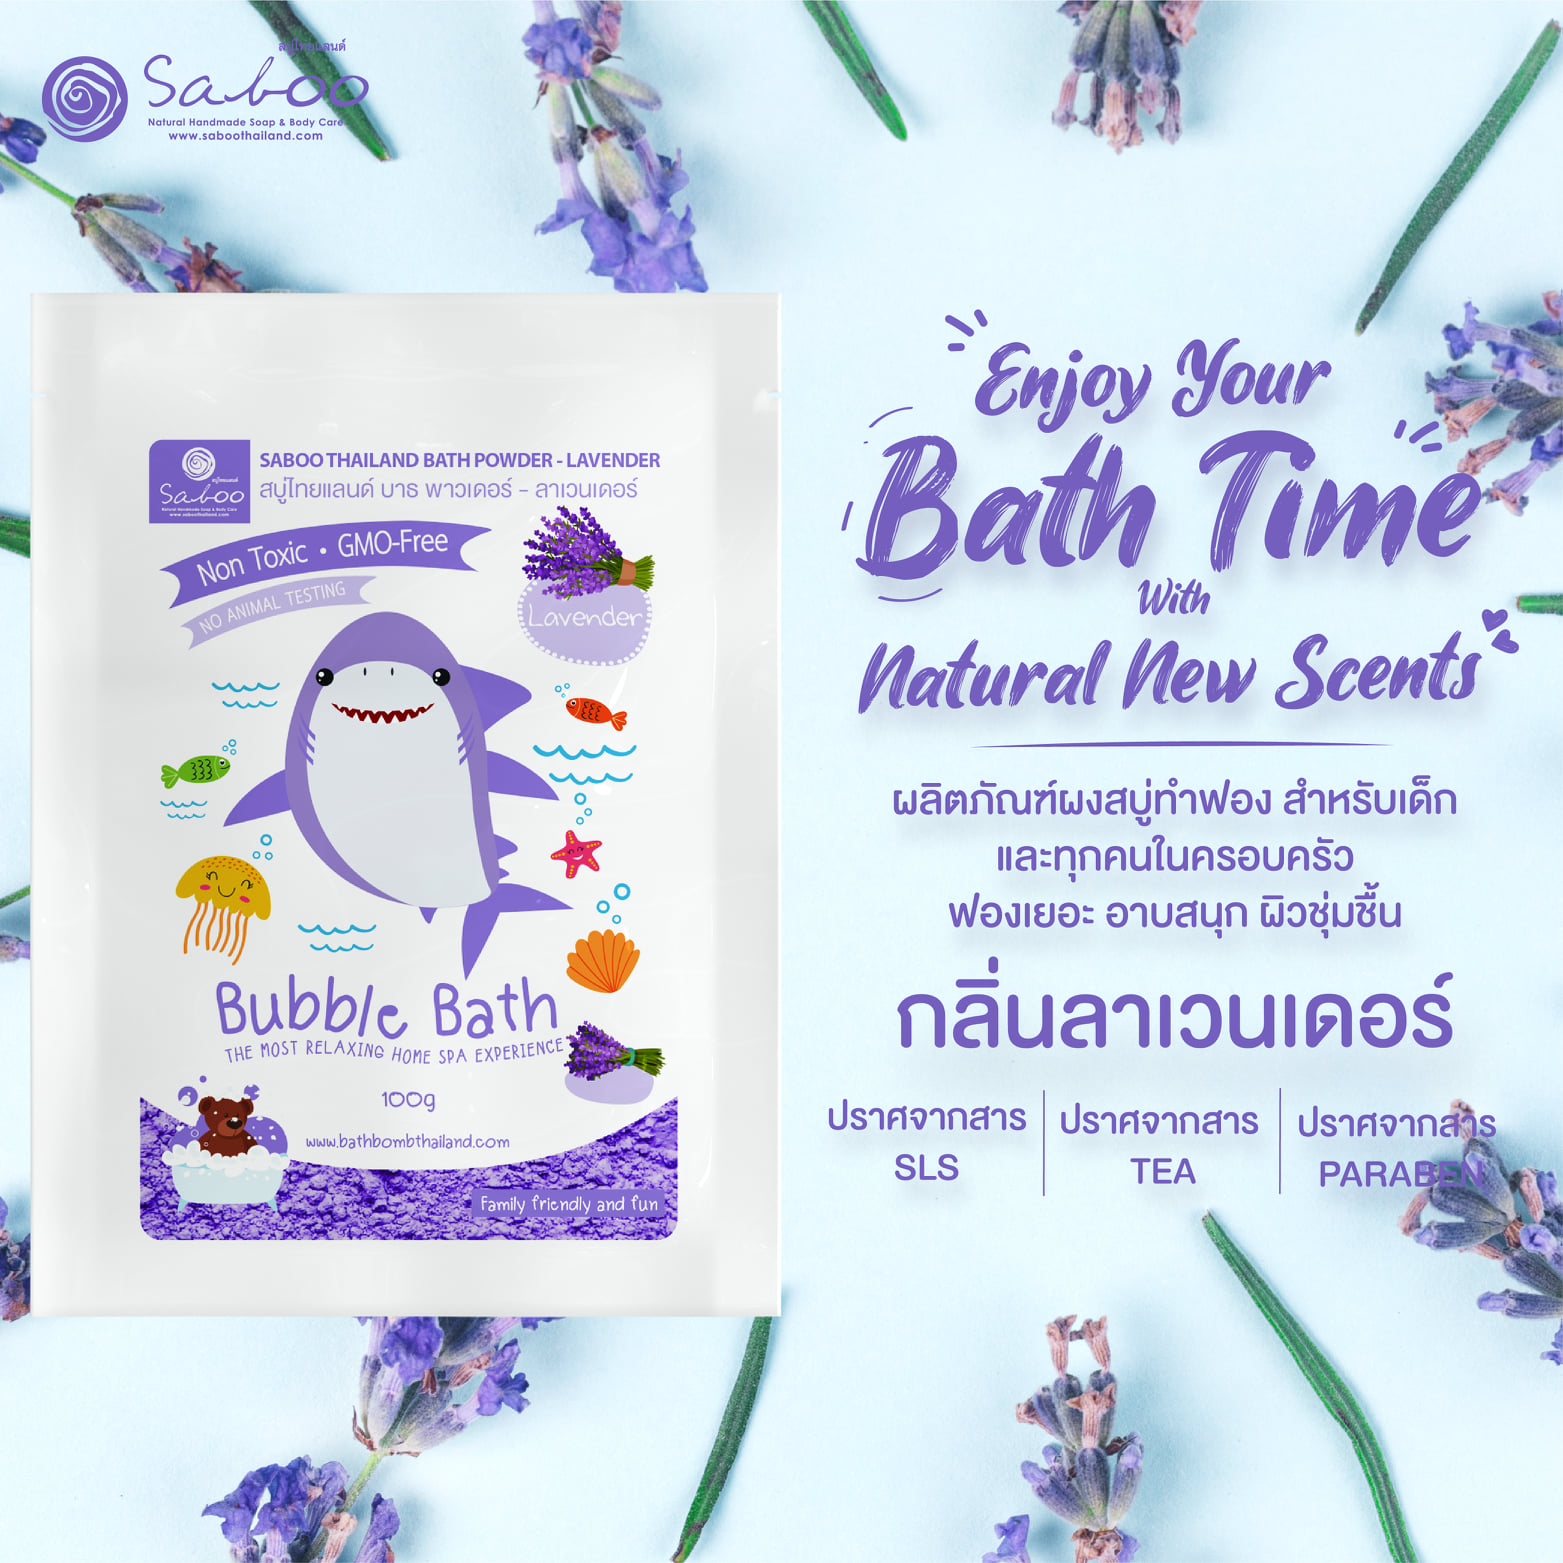 Saboo Thailand,Bath Powder,Saboo Bath Powder,ผงฟอง,ฟอง,แช่ตัว,บาธบอม,ผงแช่ตัว